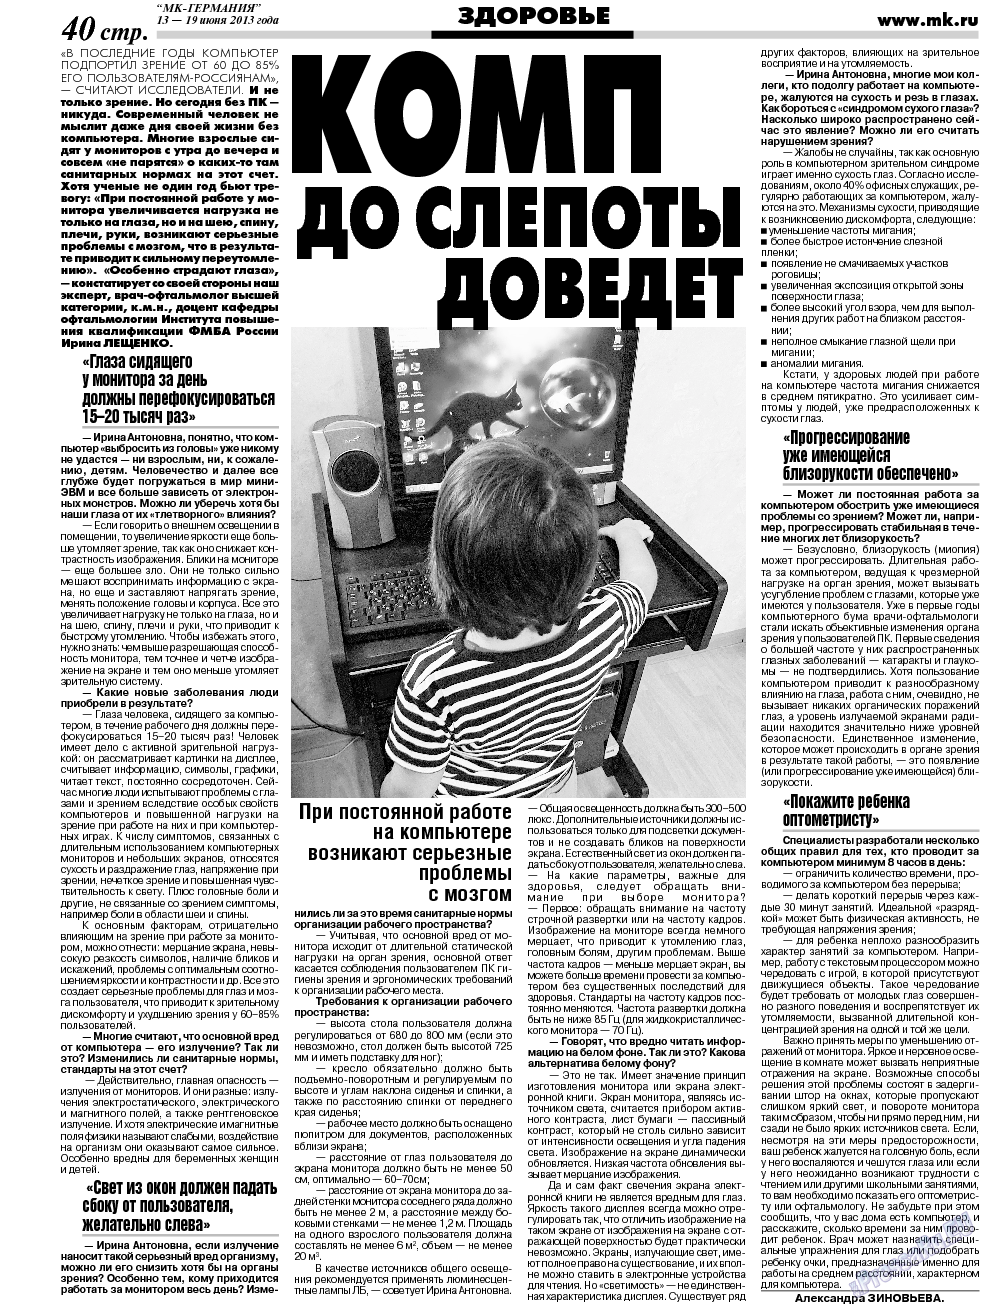 МК-Германия, газета. 2013 №24 стр.40